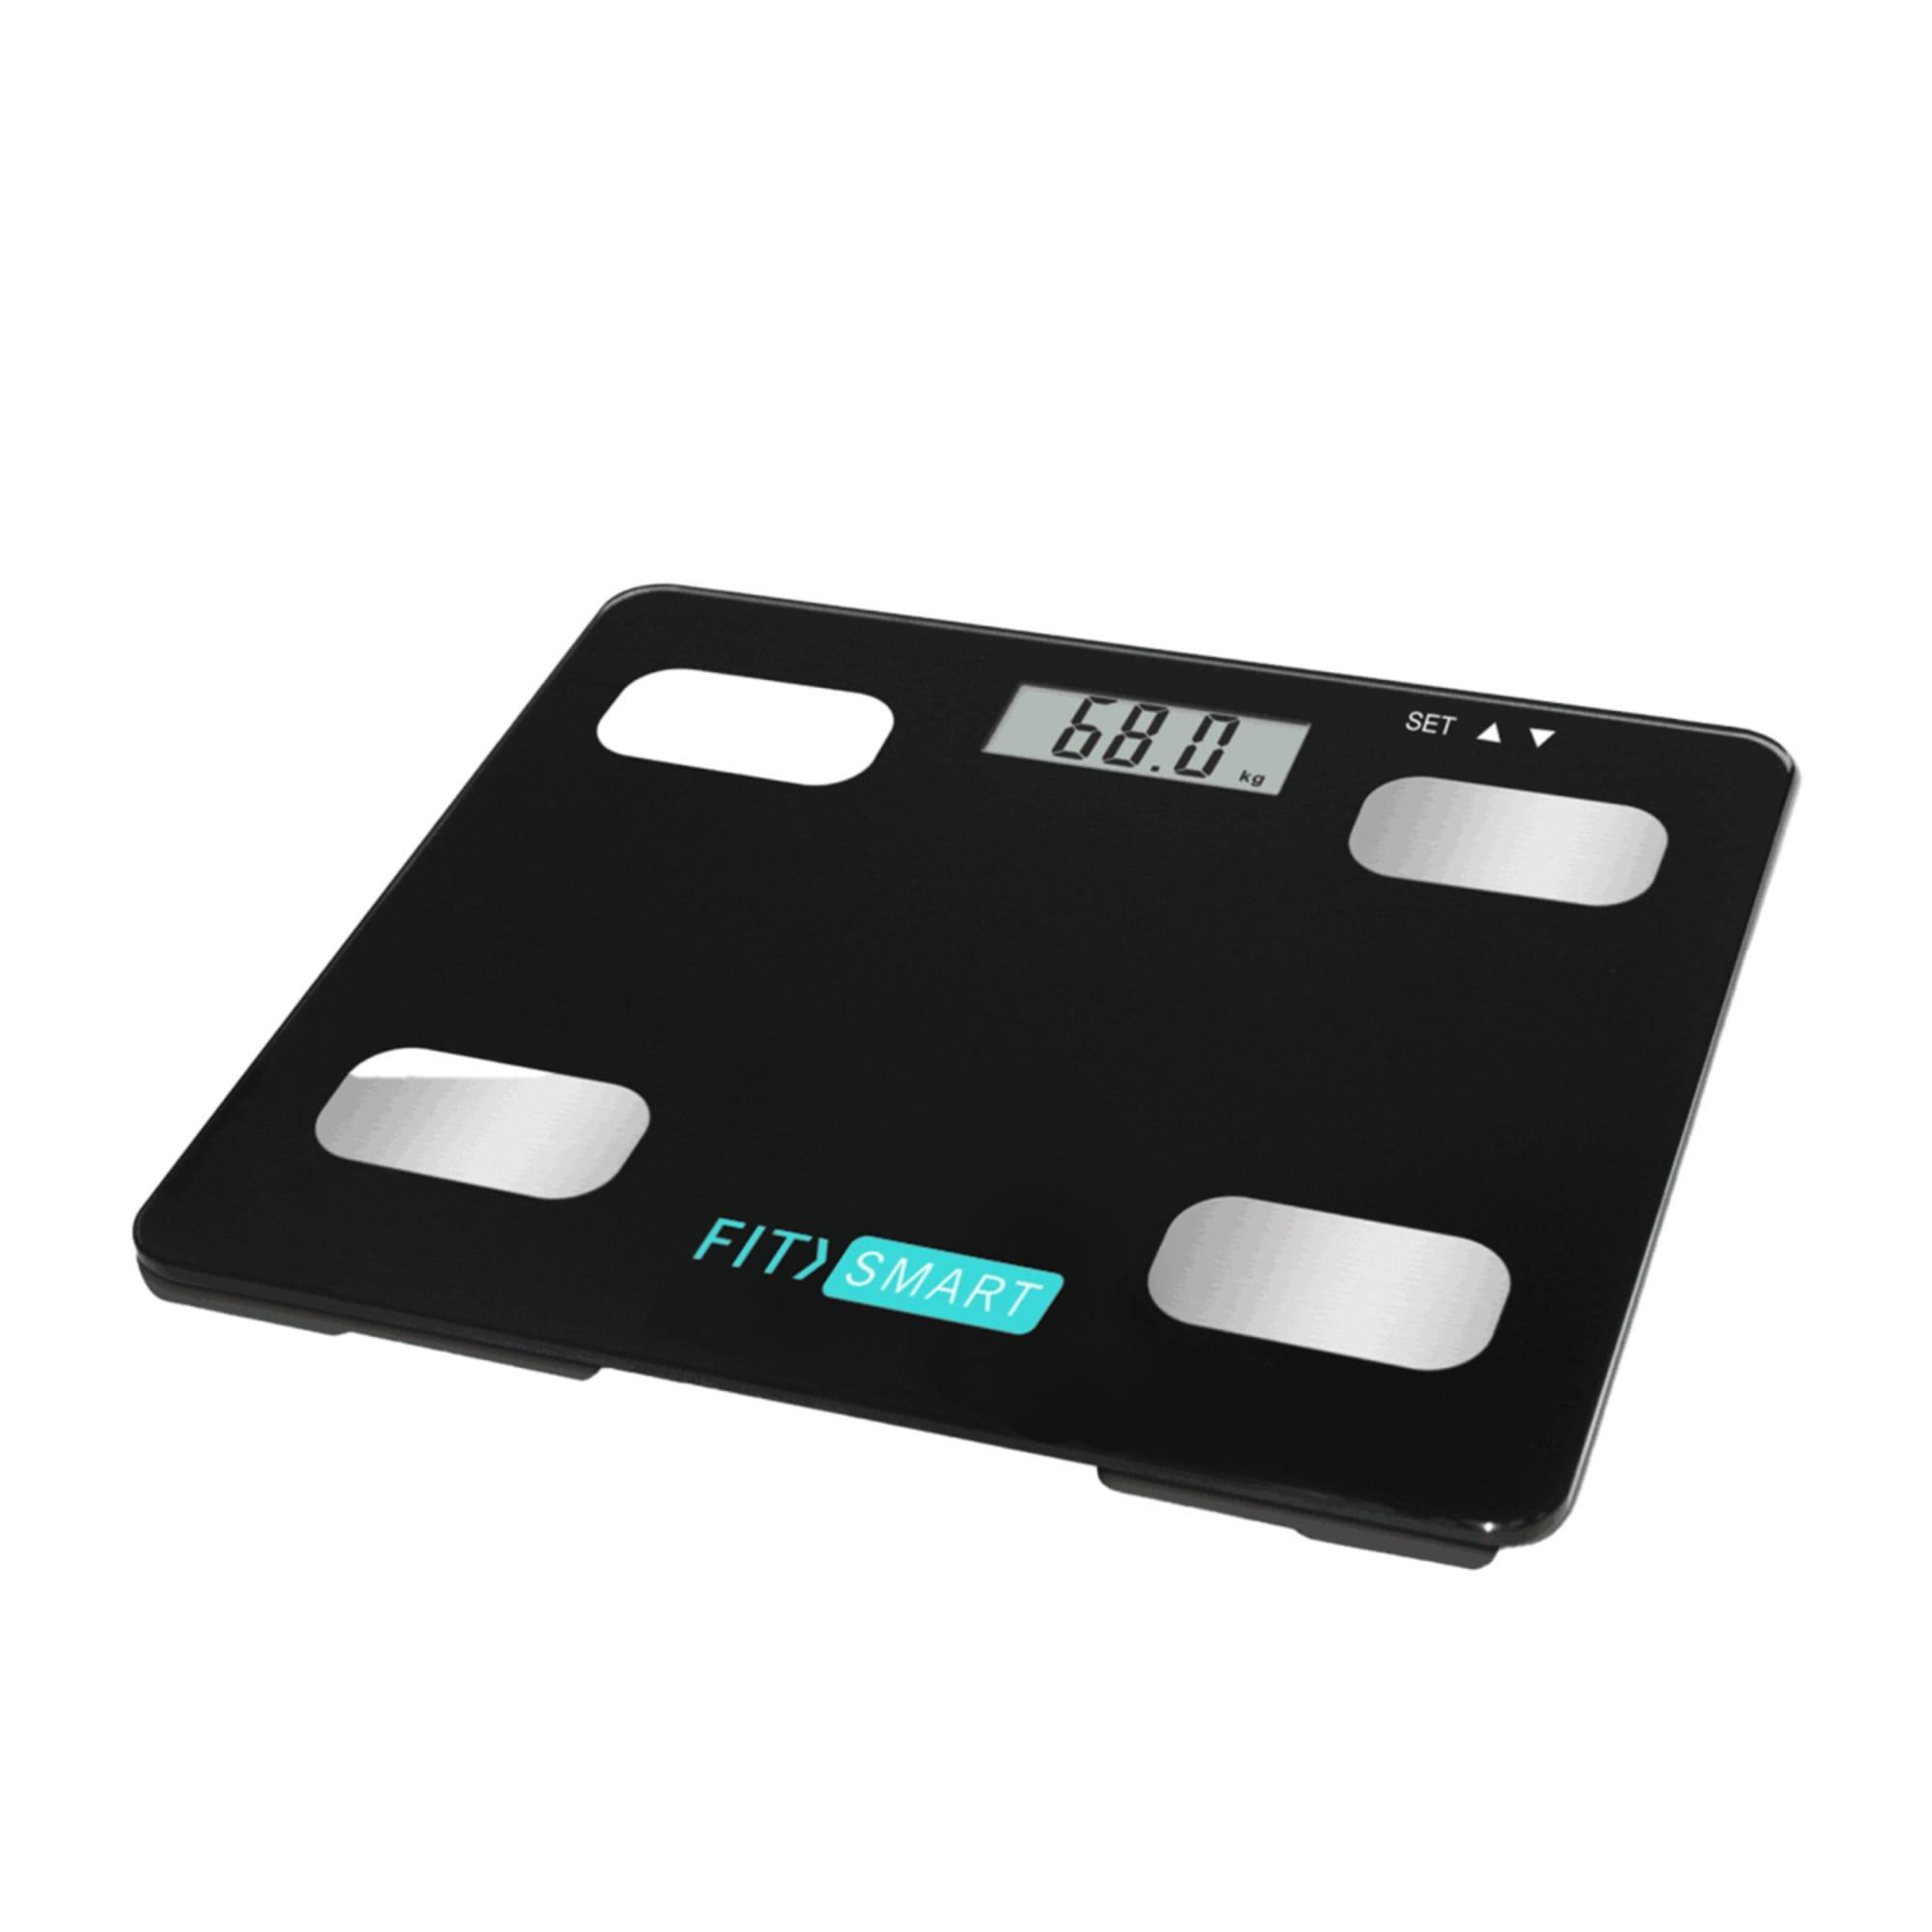 FitSmart Electronic Floor Body Scale Image 3